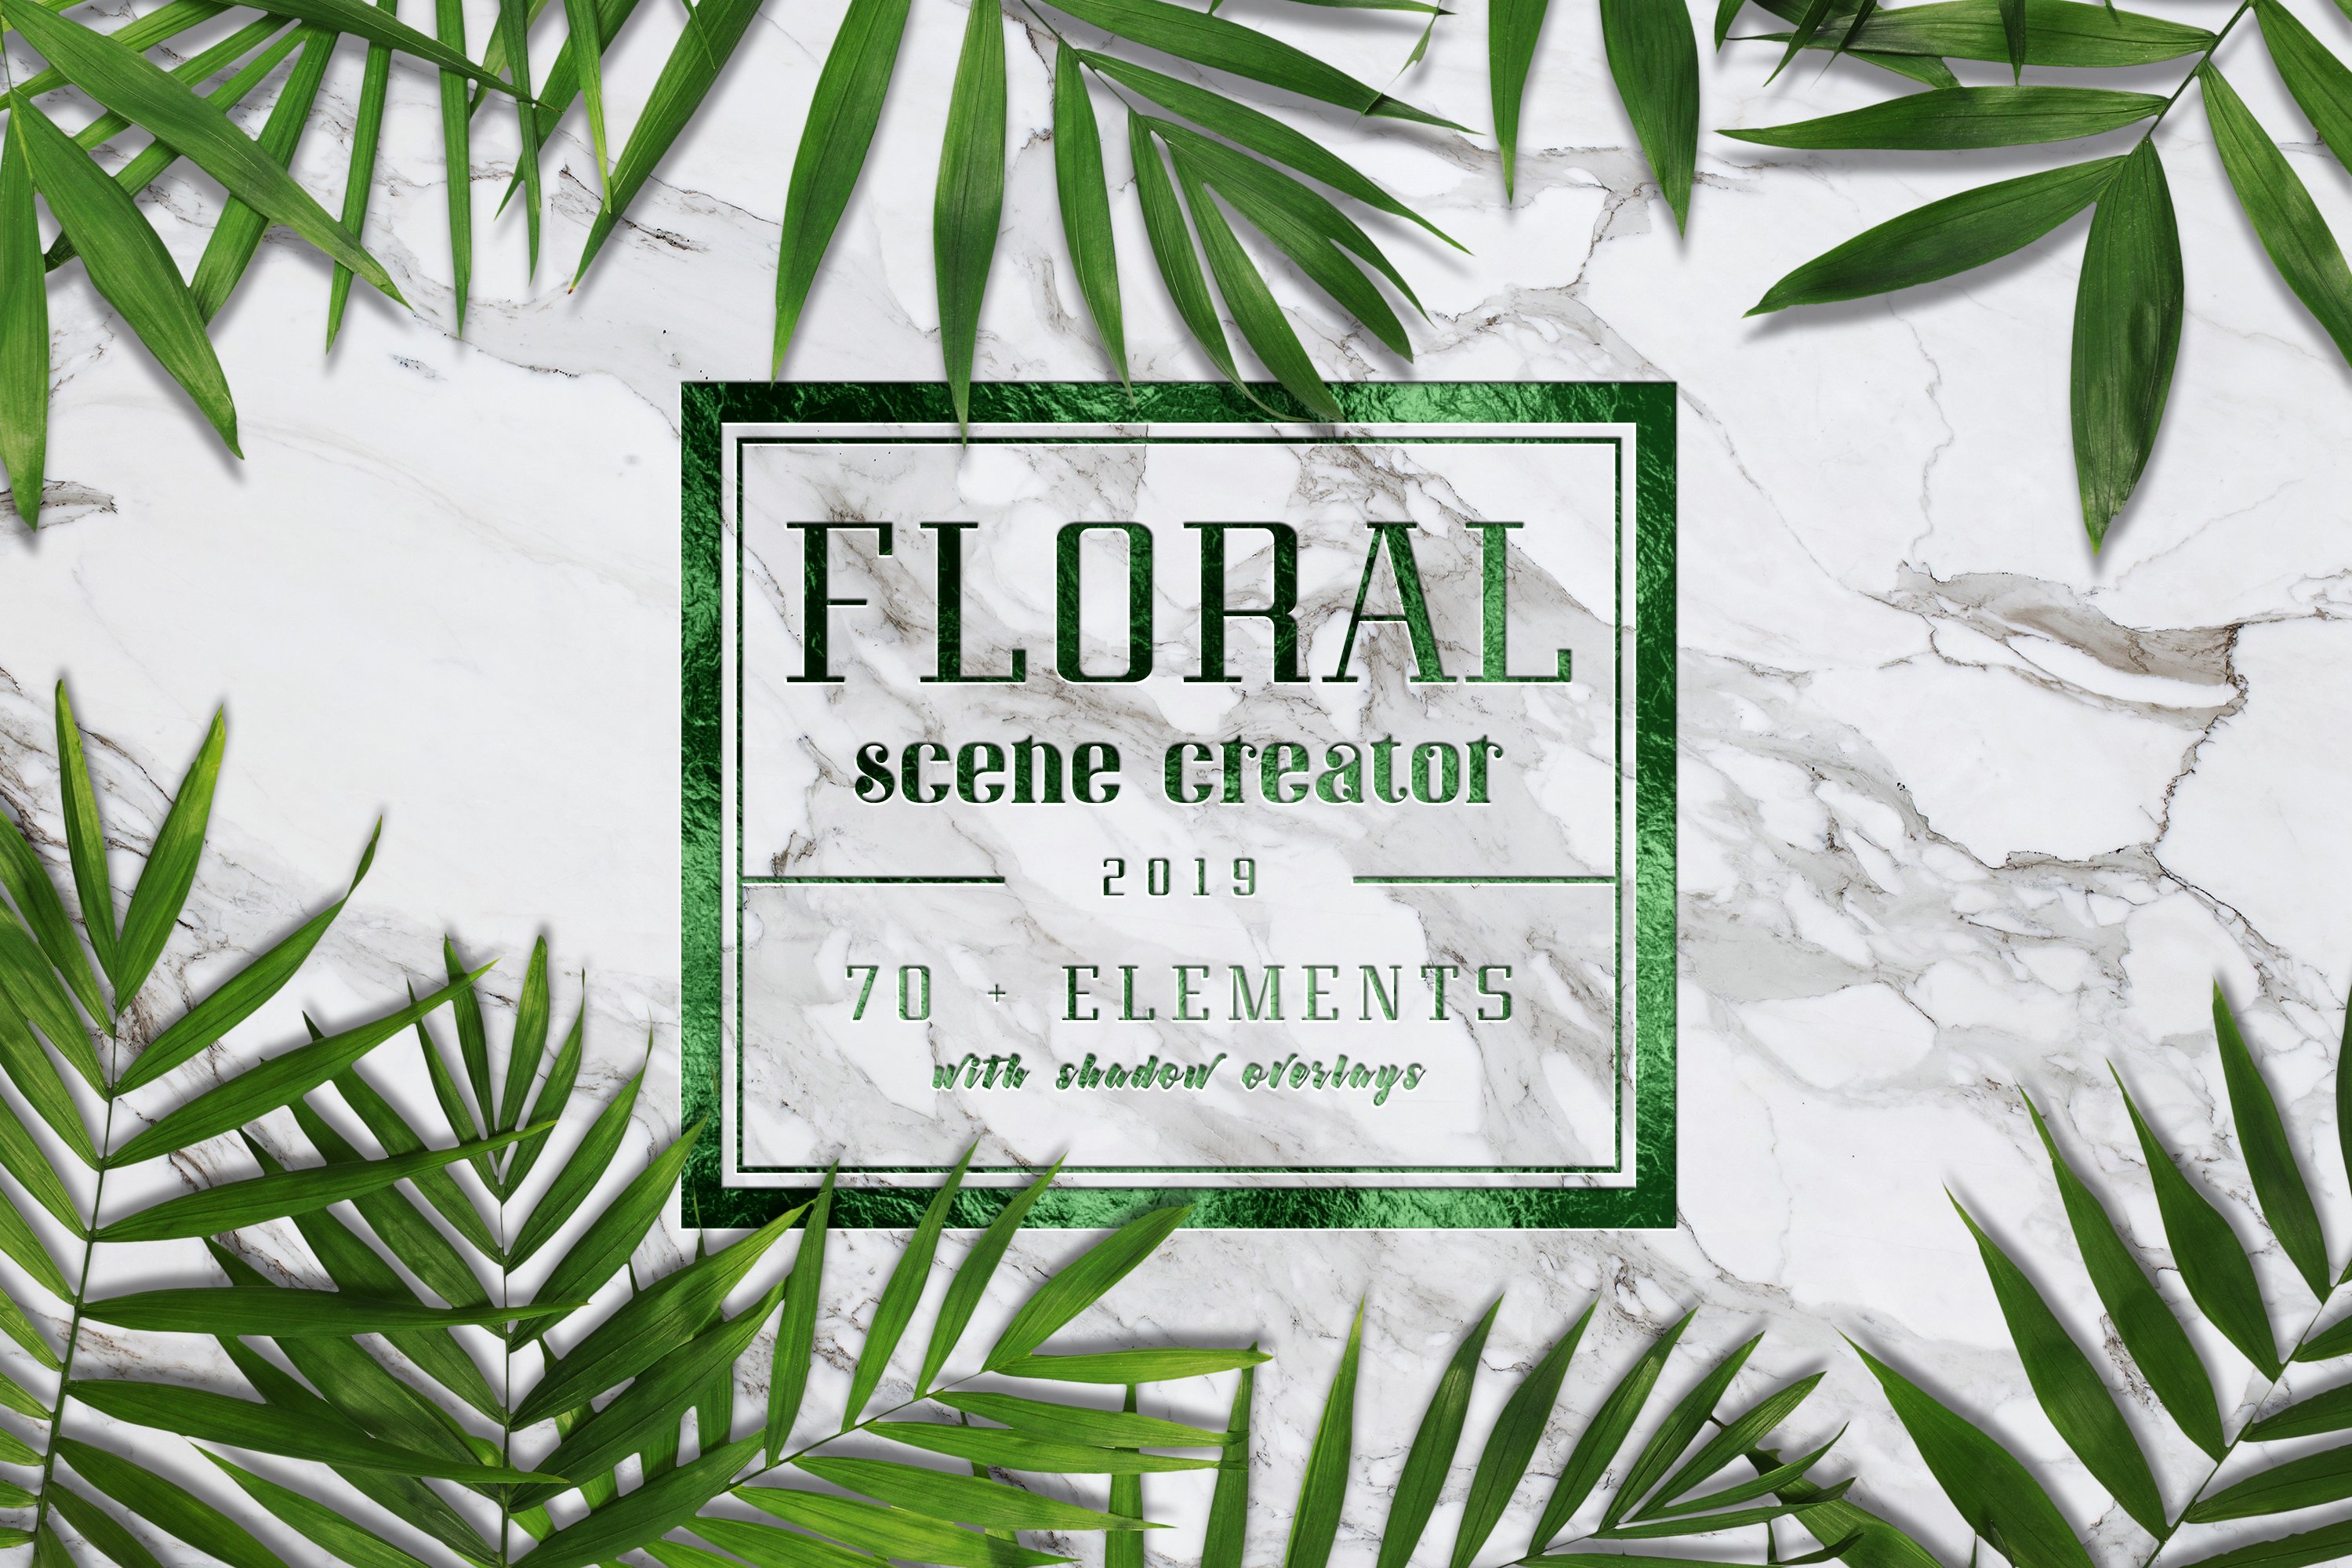 Floral Scene Creator #01 cover image.